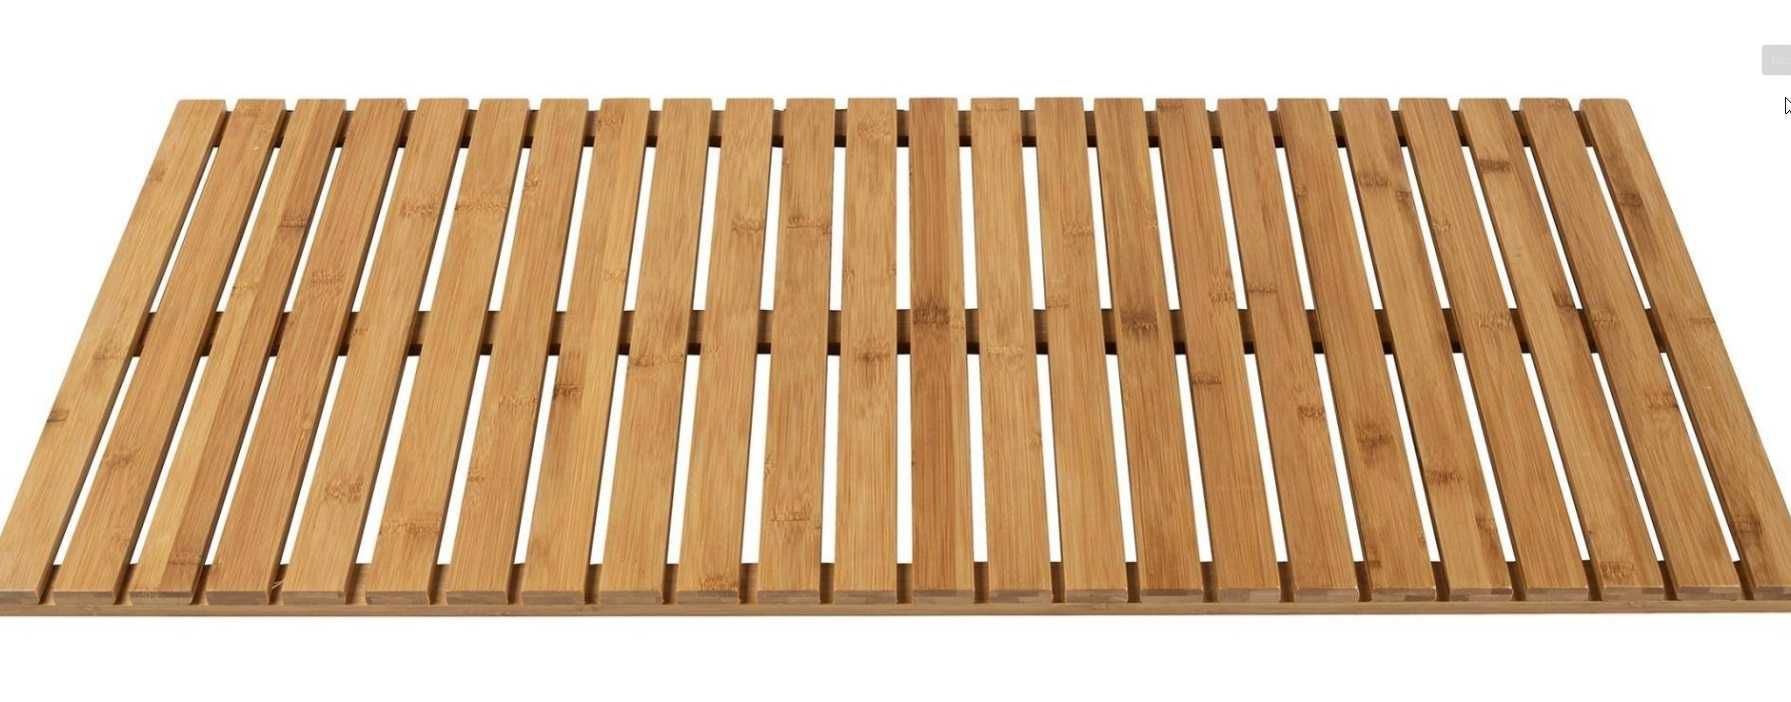 Covor/Platforma din lemn de bambus BAMBOO, 100 x 50 cm, natural, Wenko